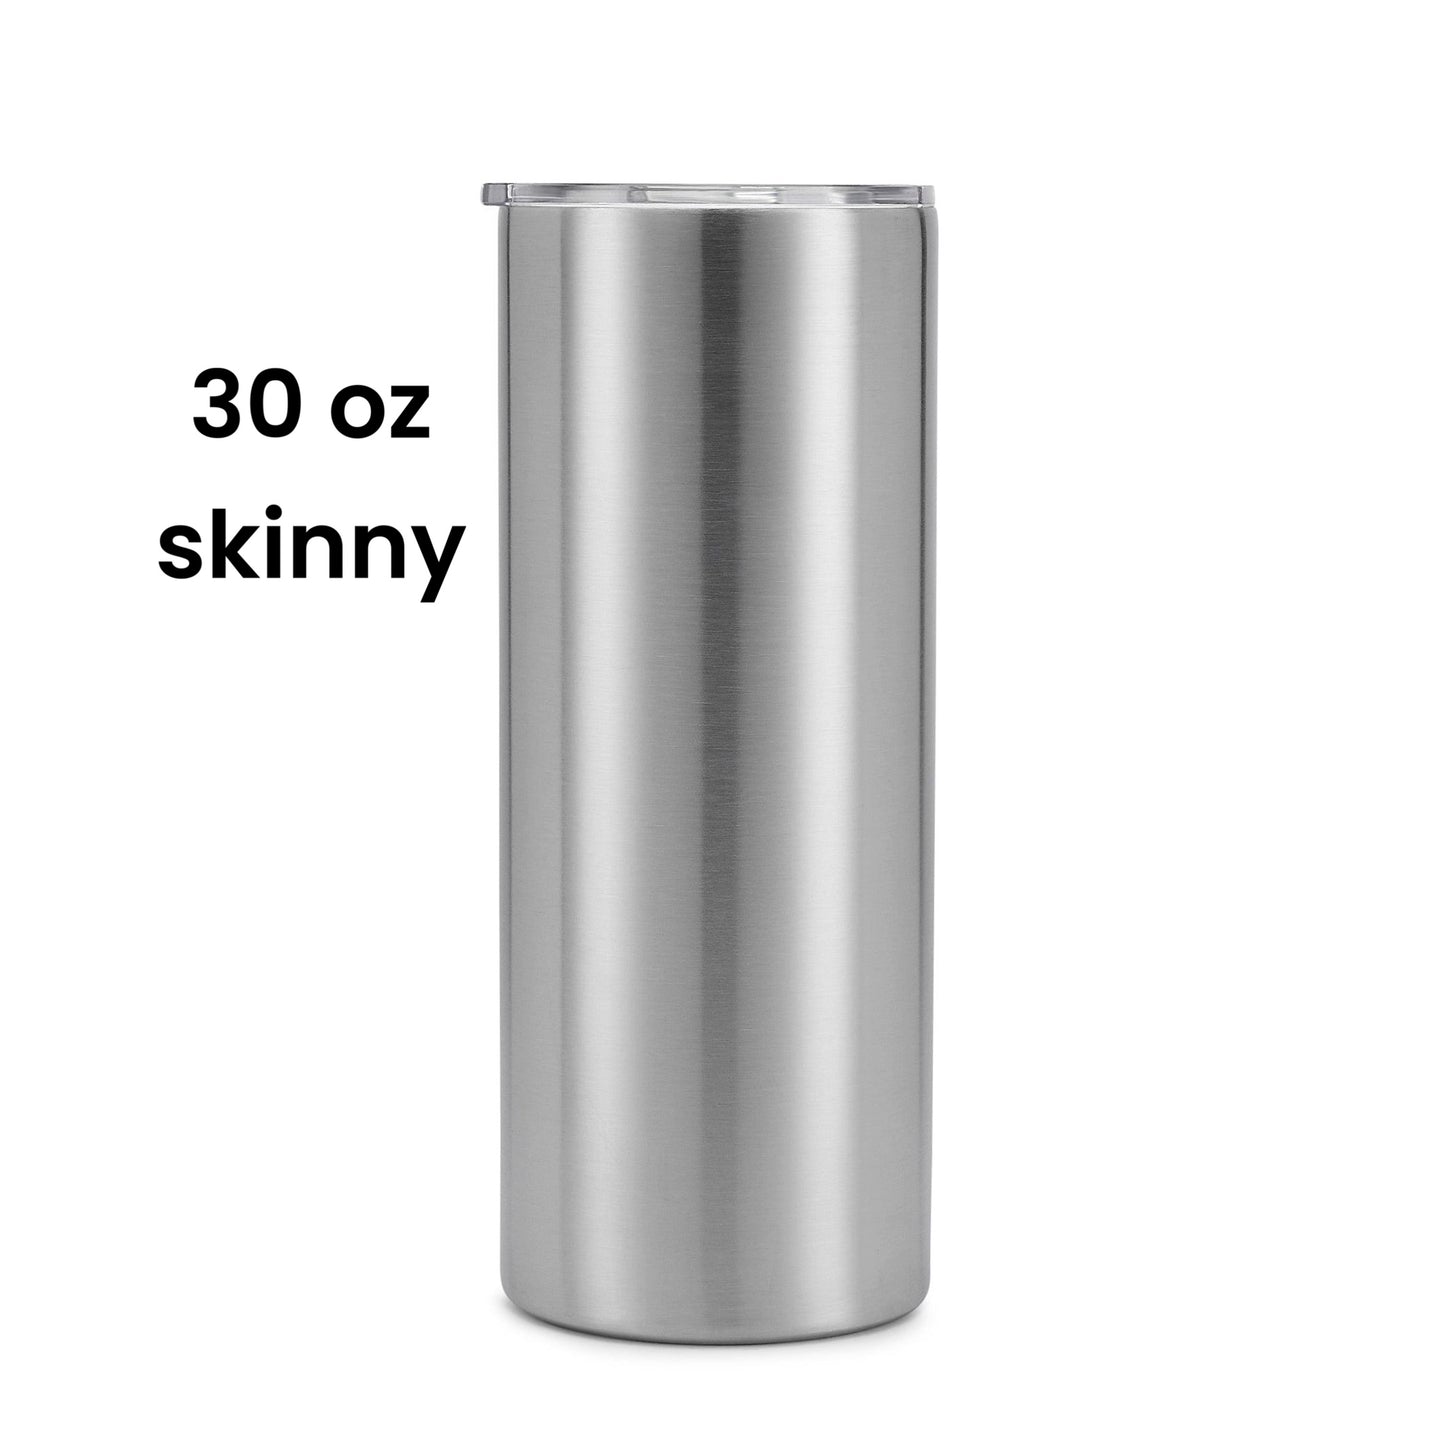 30 oz skinny